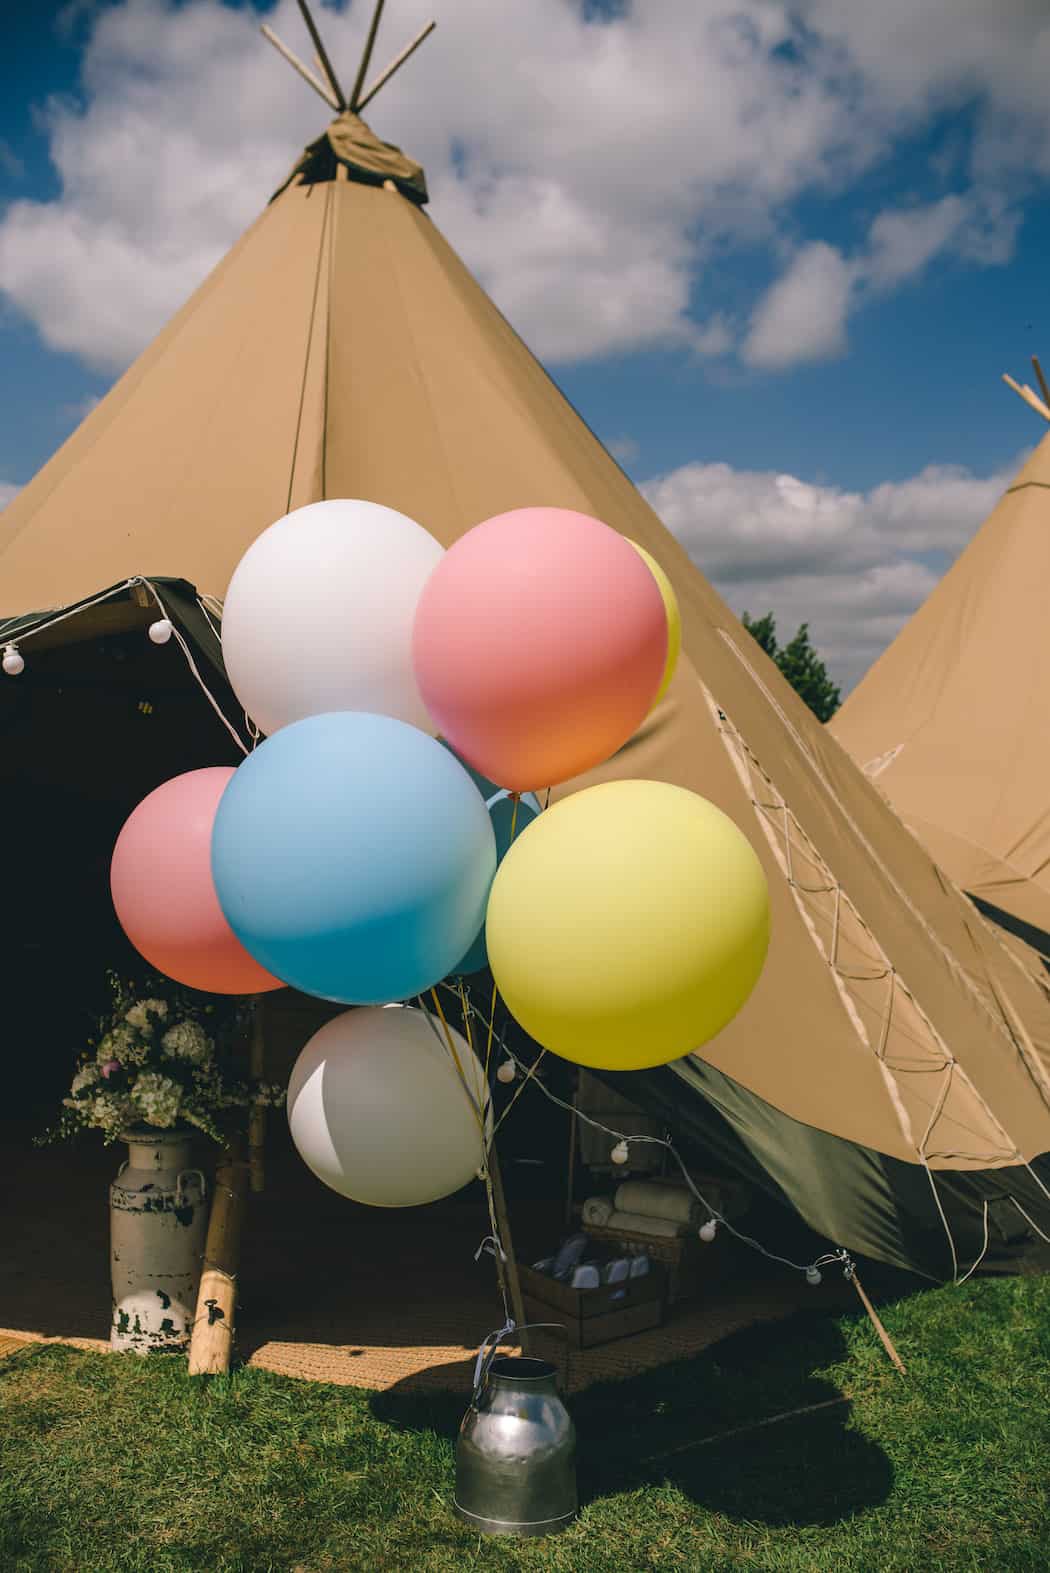 Giant Balloons creating a statement entrance to bawdon lodge farm tipi wedding celebration